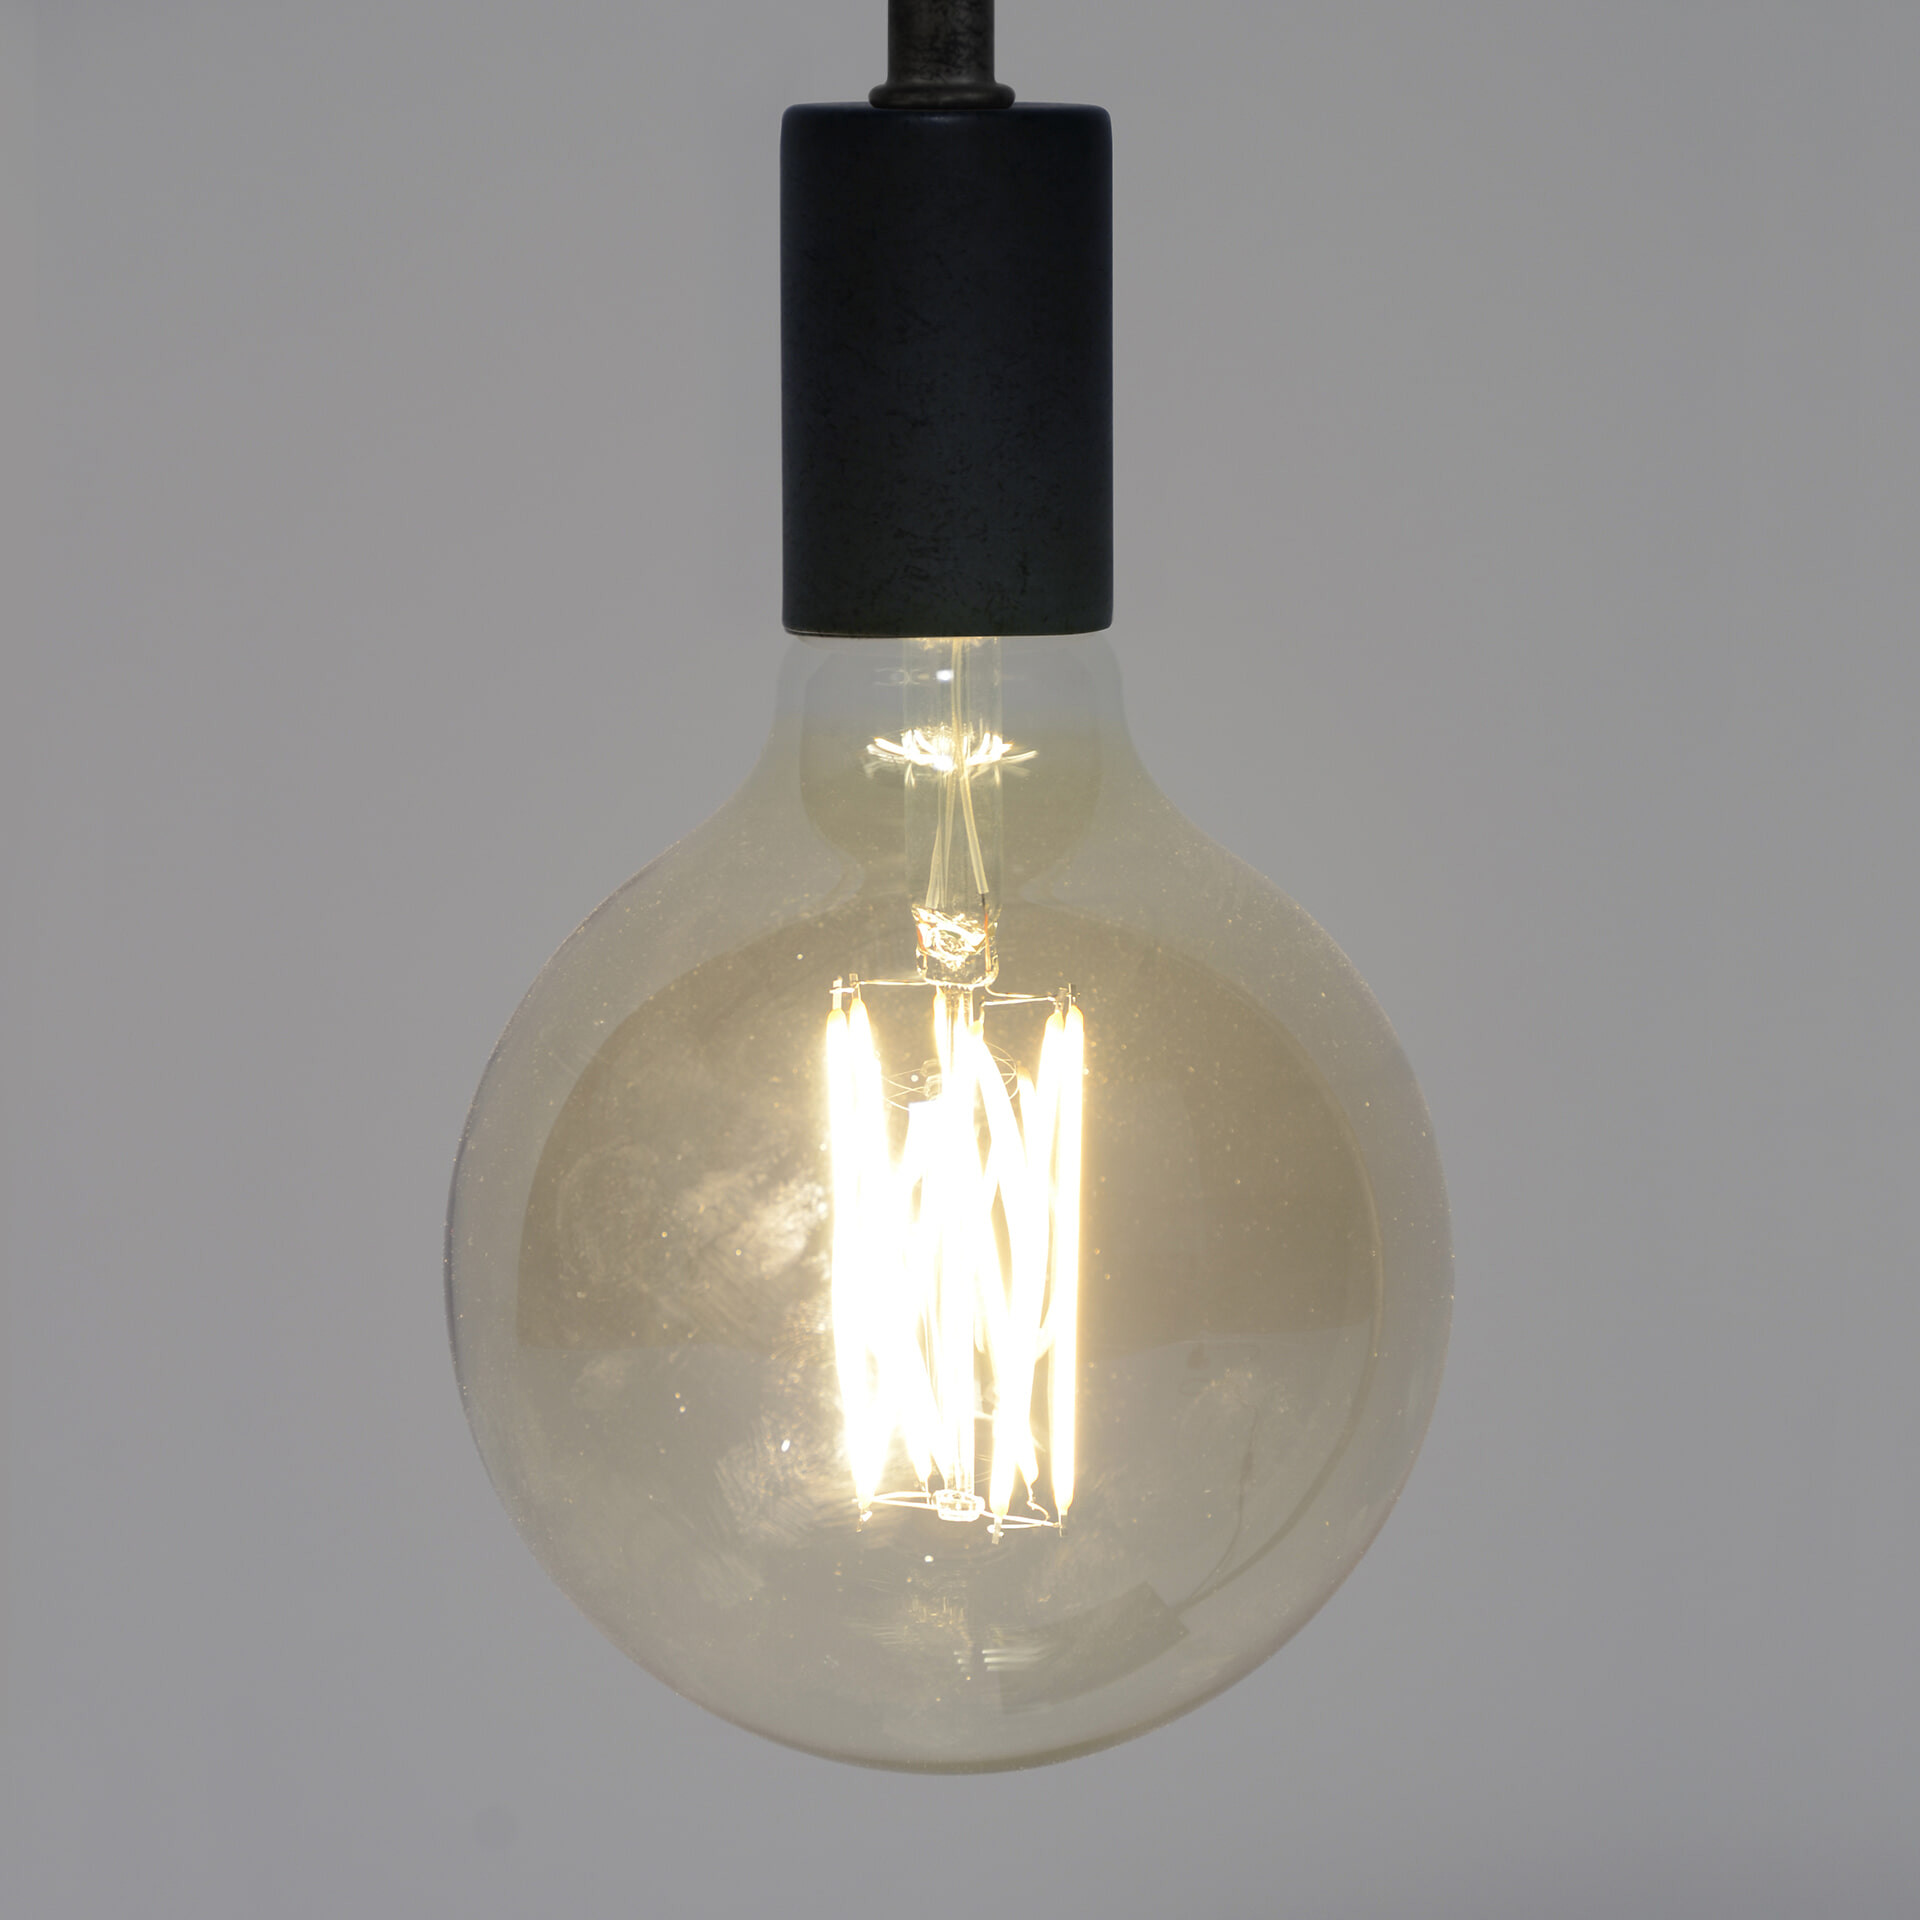 Kooldraadlamp Bol XL Ø12,5cm E27 LED 6W goldline, dimbaar - Amberkleurig glas